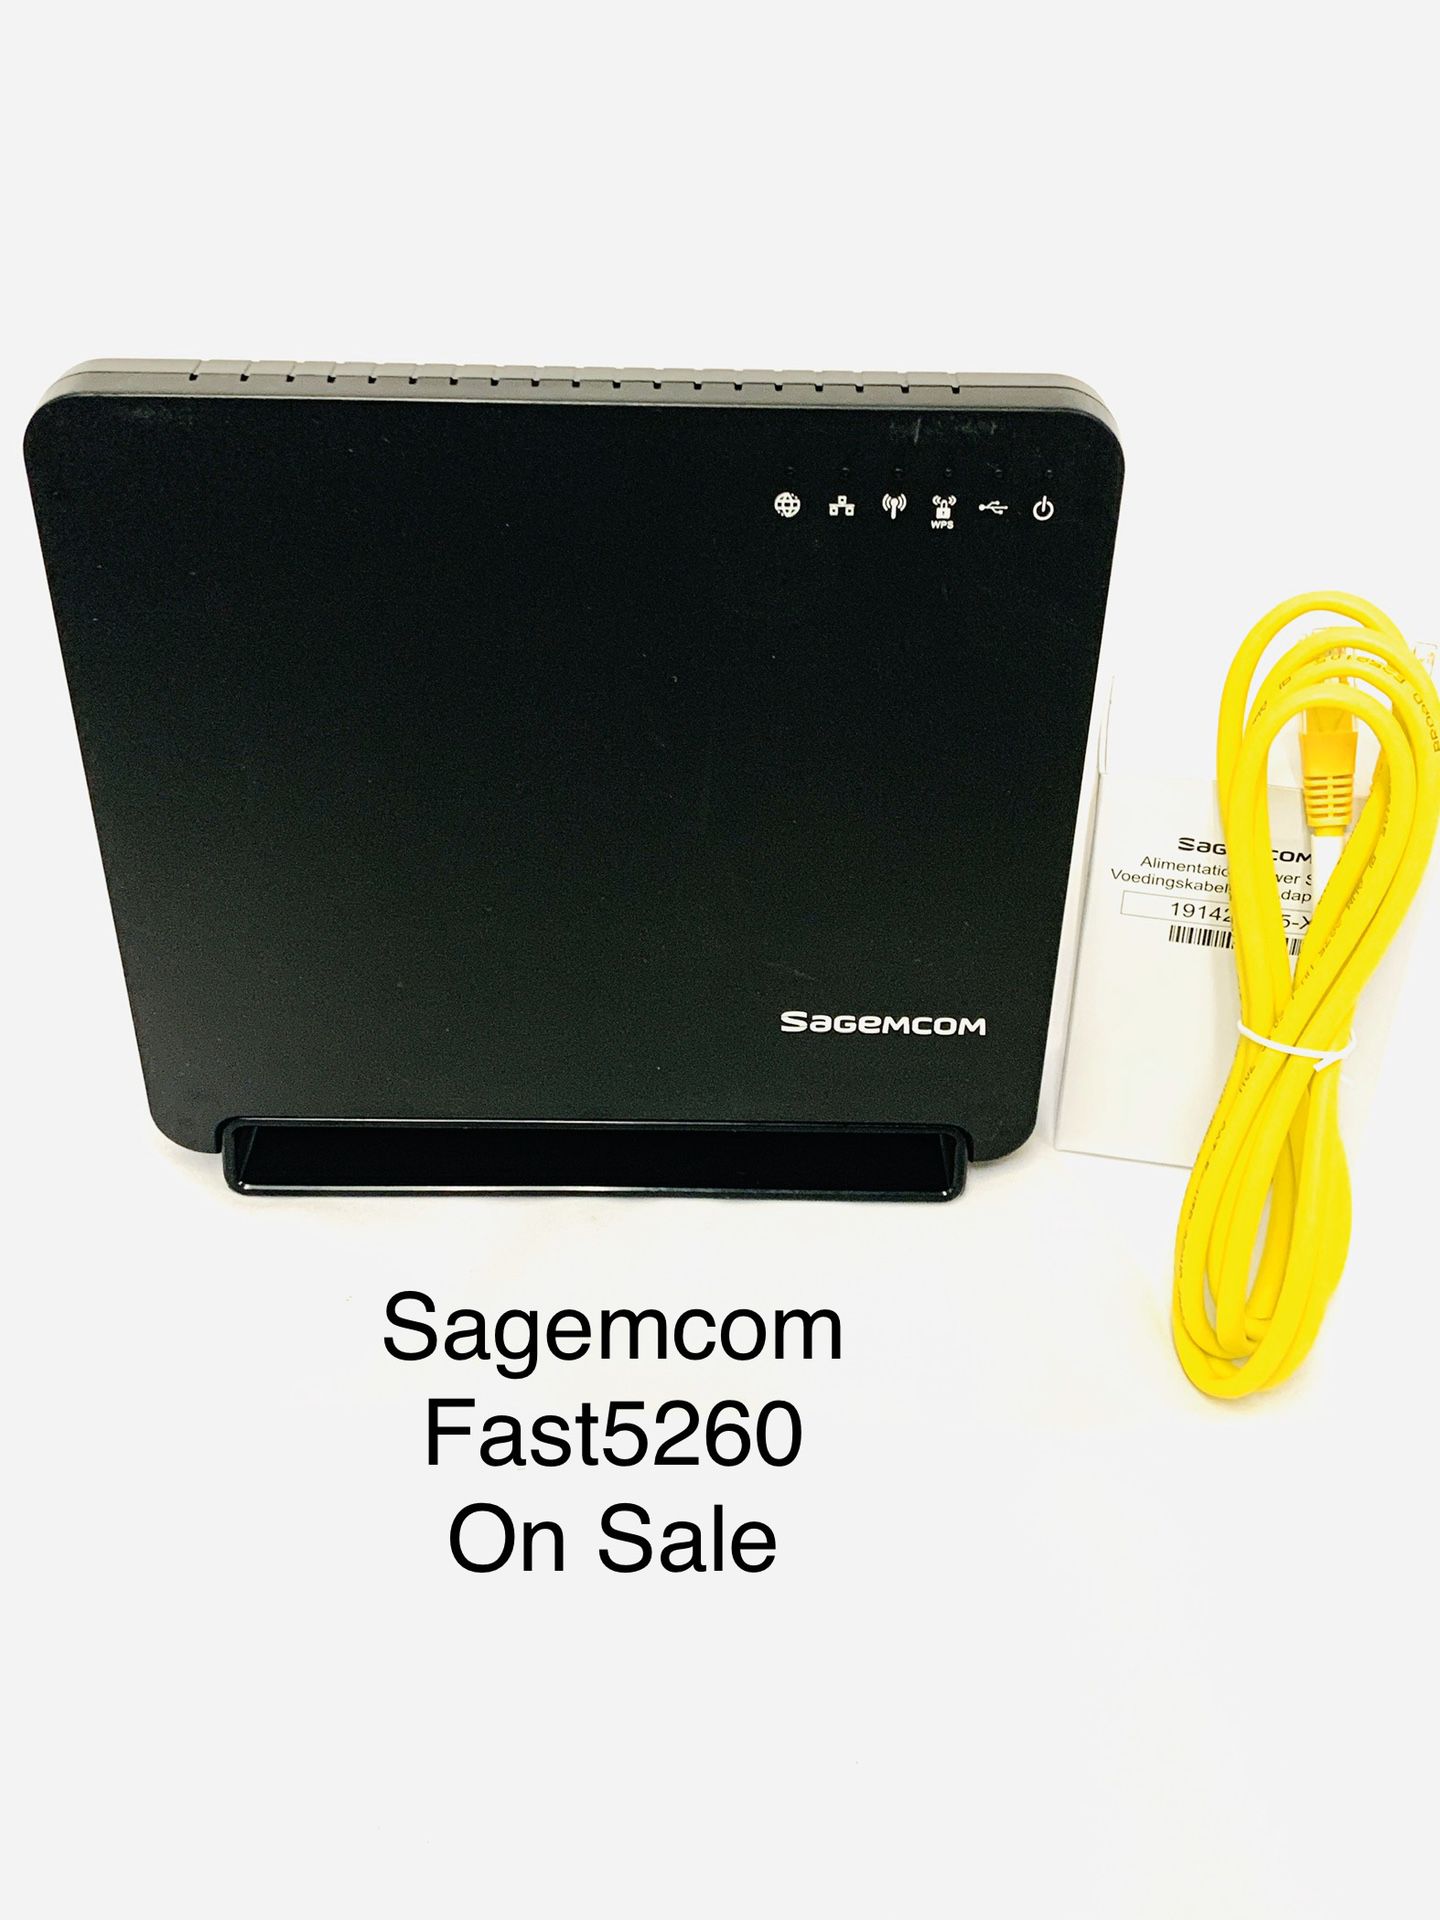 Internet Router Sagemcom Fast5260